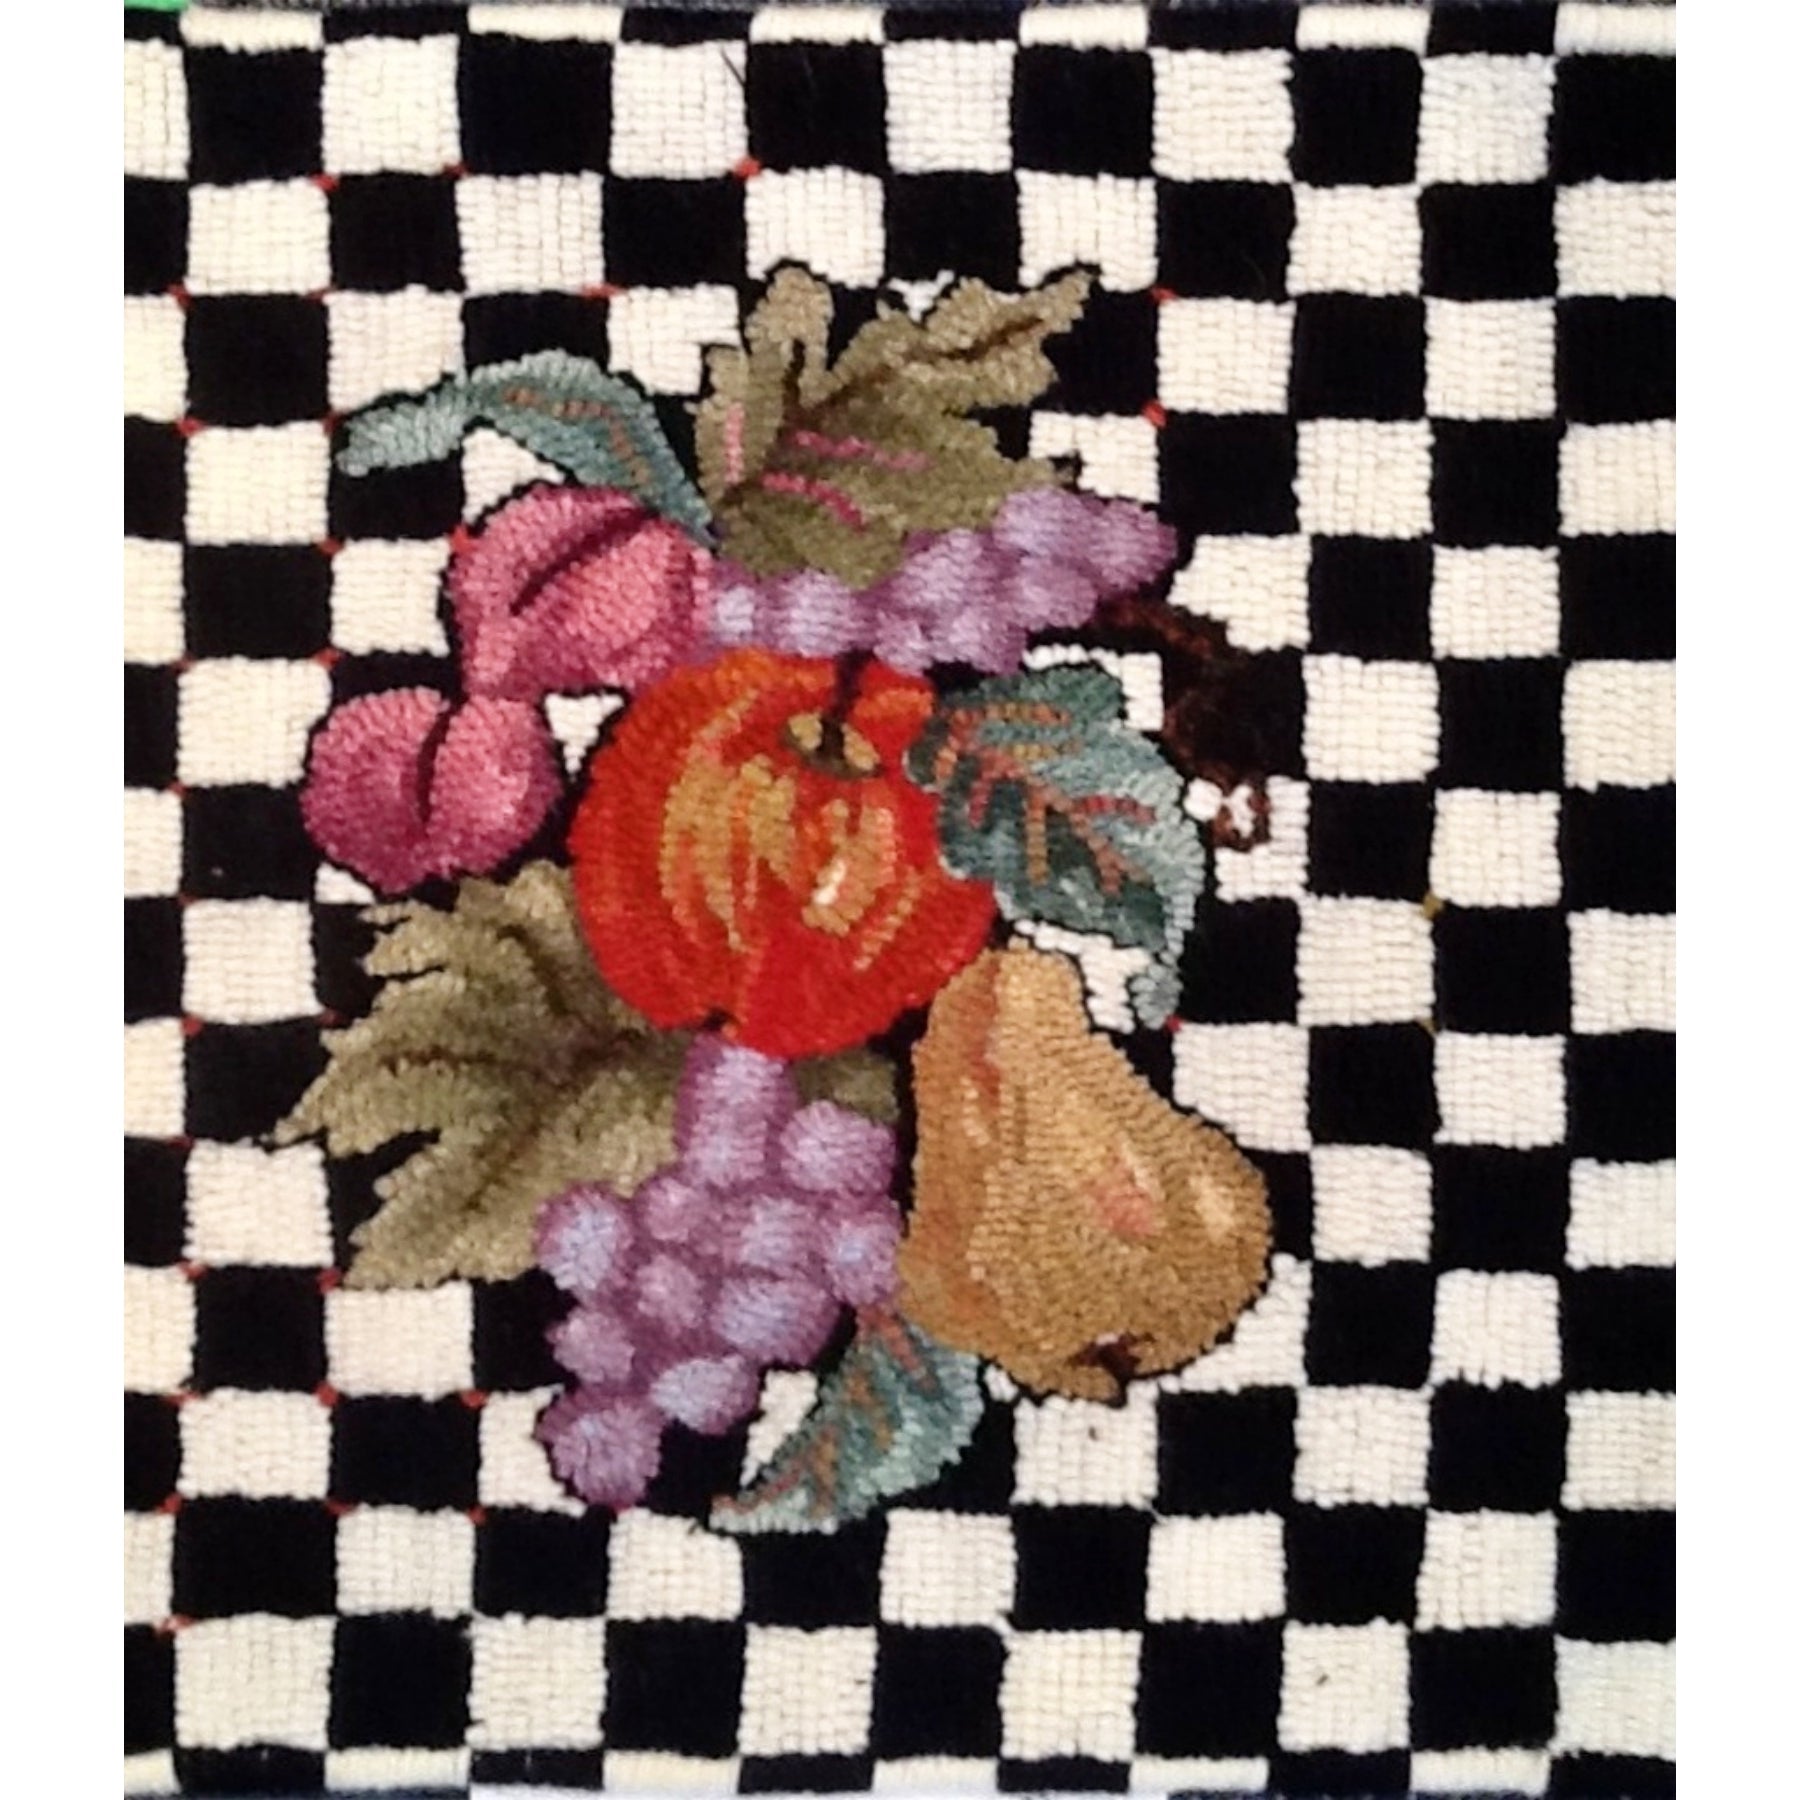 Fruit, rug hooked by Carol Murphy